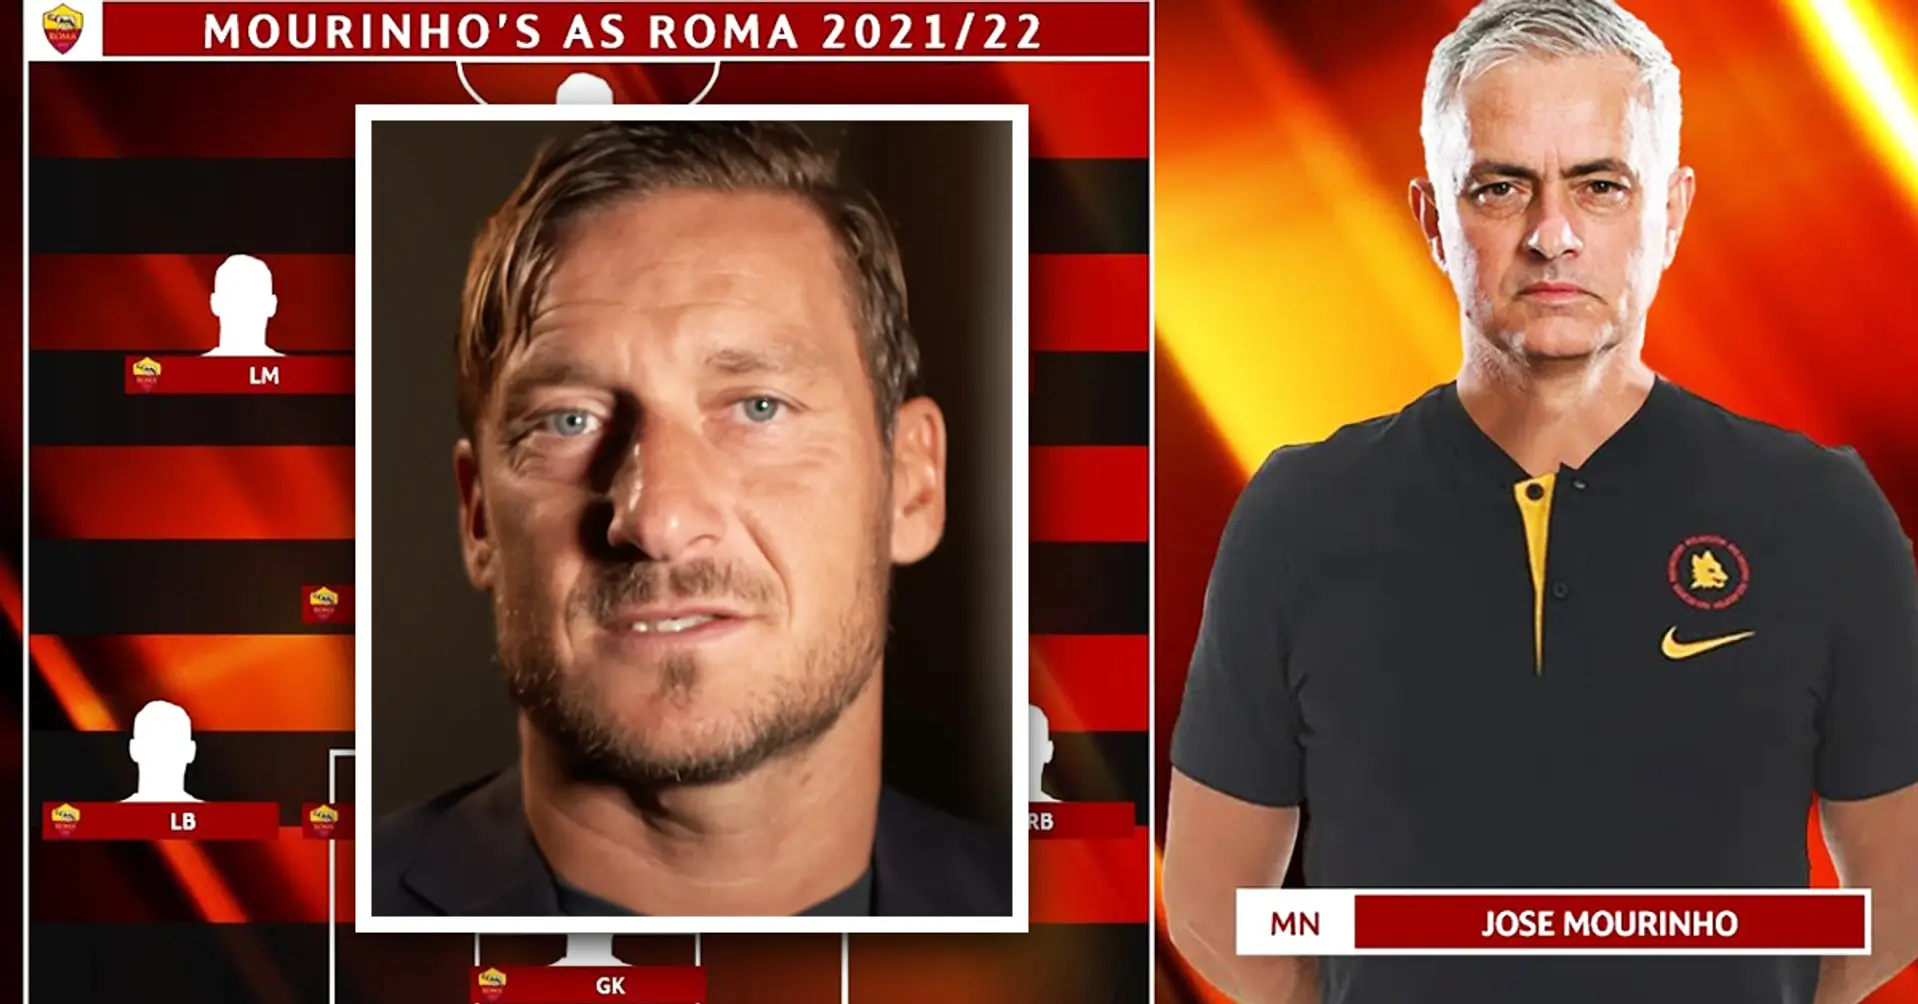 Francesco Totti calls Mourinho 'strongerst coach in the world'. Jose immediately responds